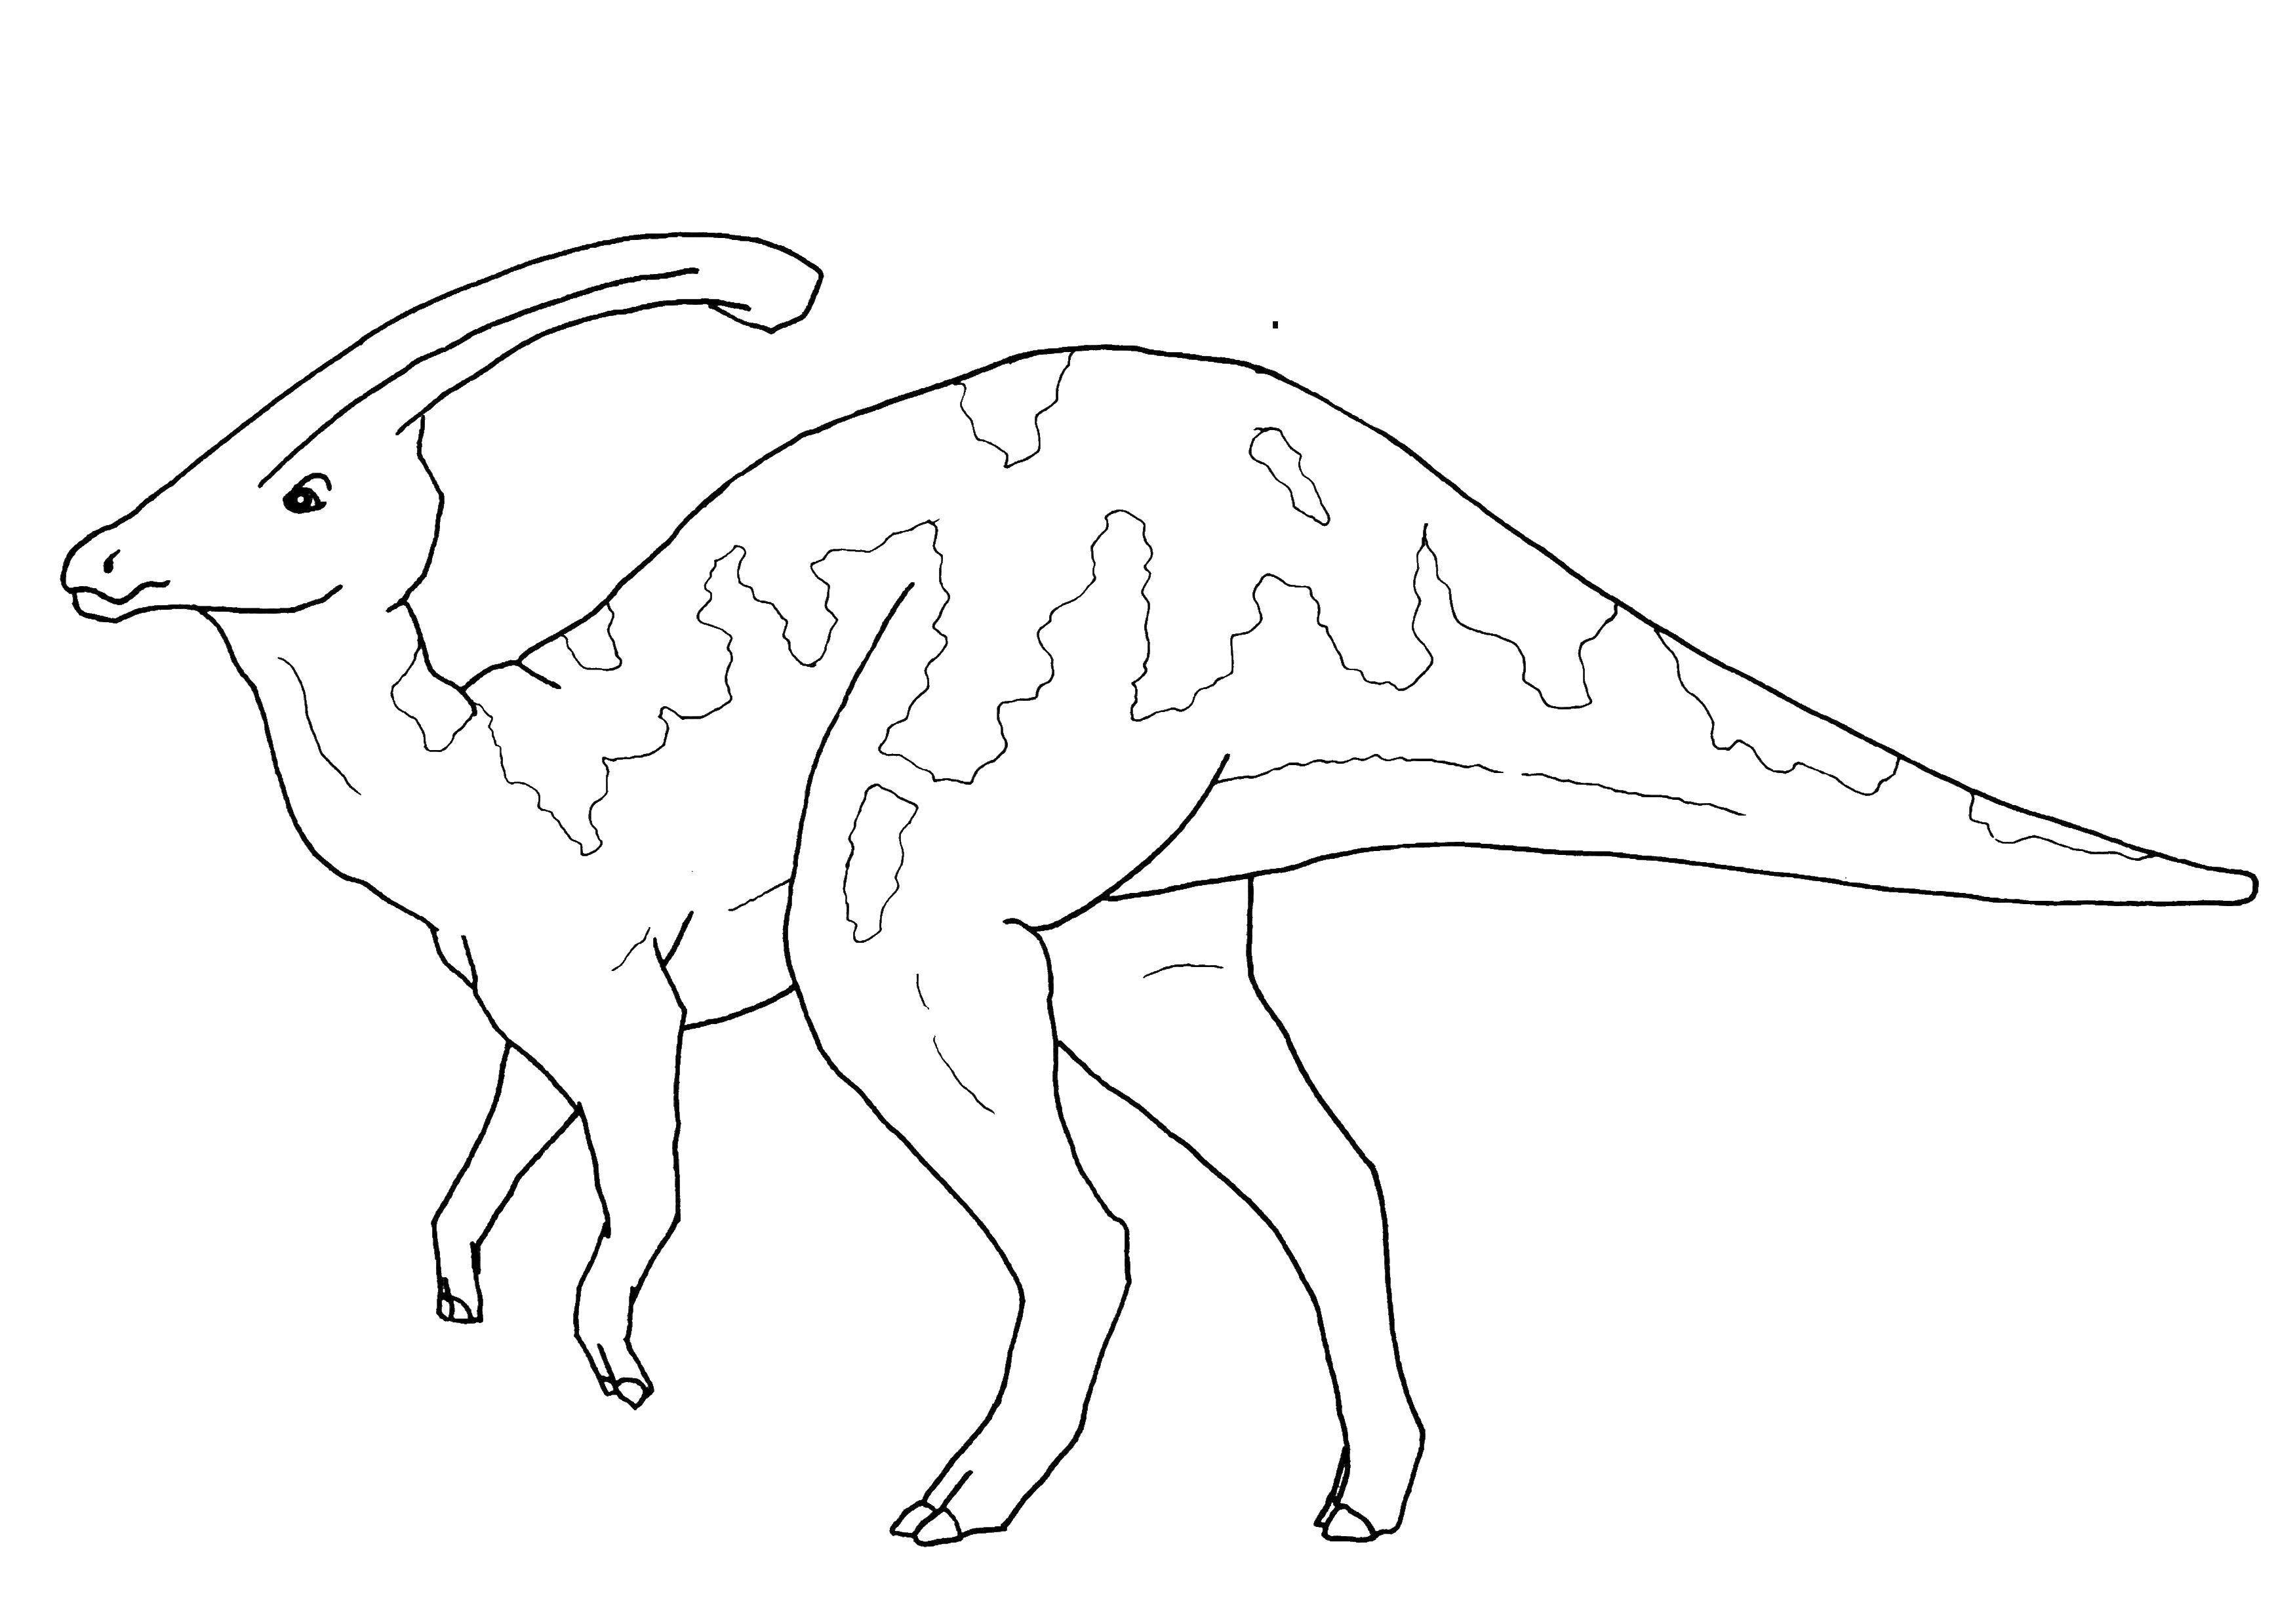 Coloring Parasaurolophus. Category dinosaur. Tags:  Dinosaurs , parasaurolophus.